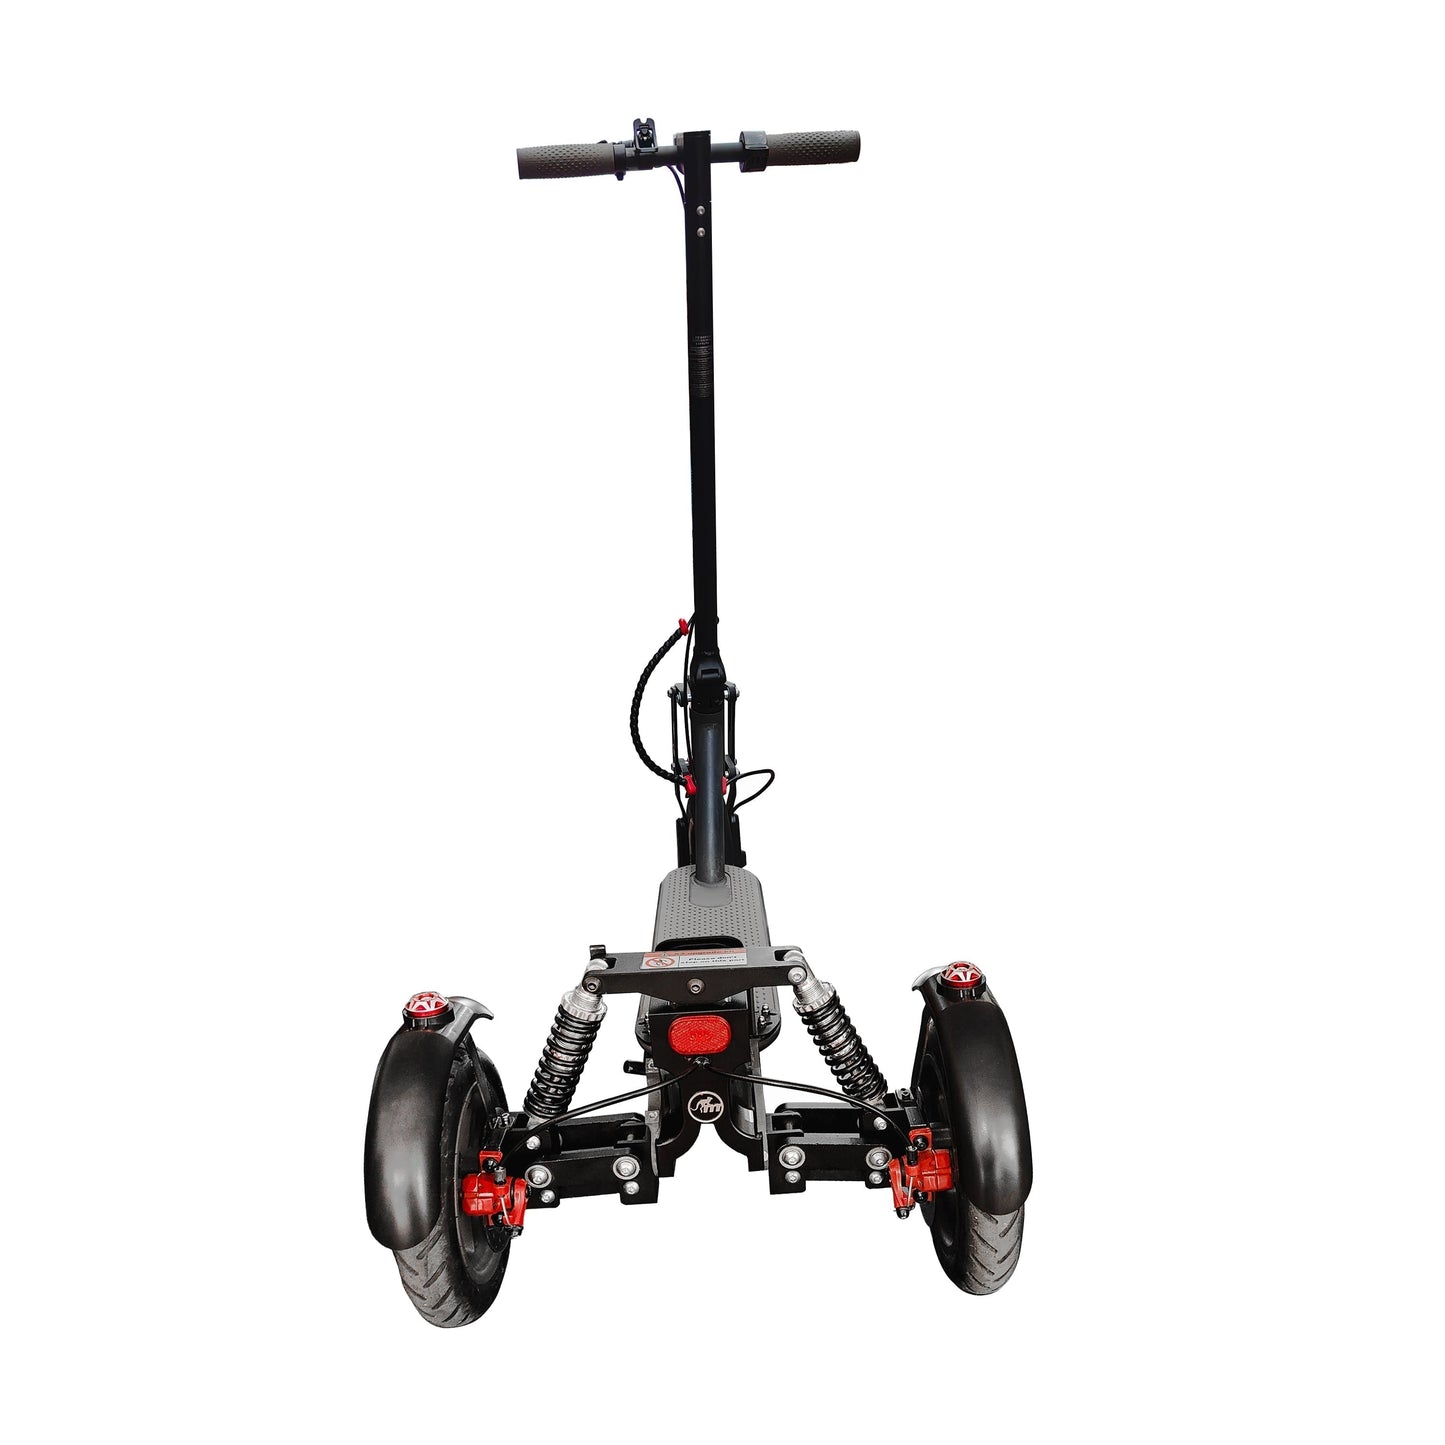 Monorim X3 upgrade kit to be Three wheels special for xiaomi mi3 lite Scooter